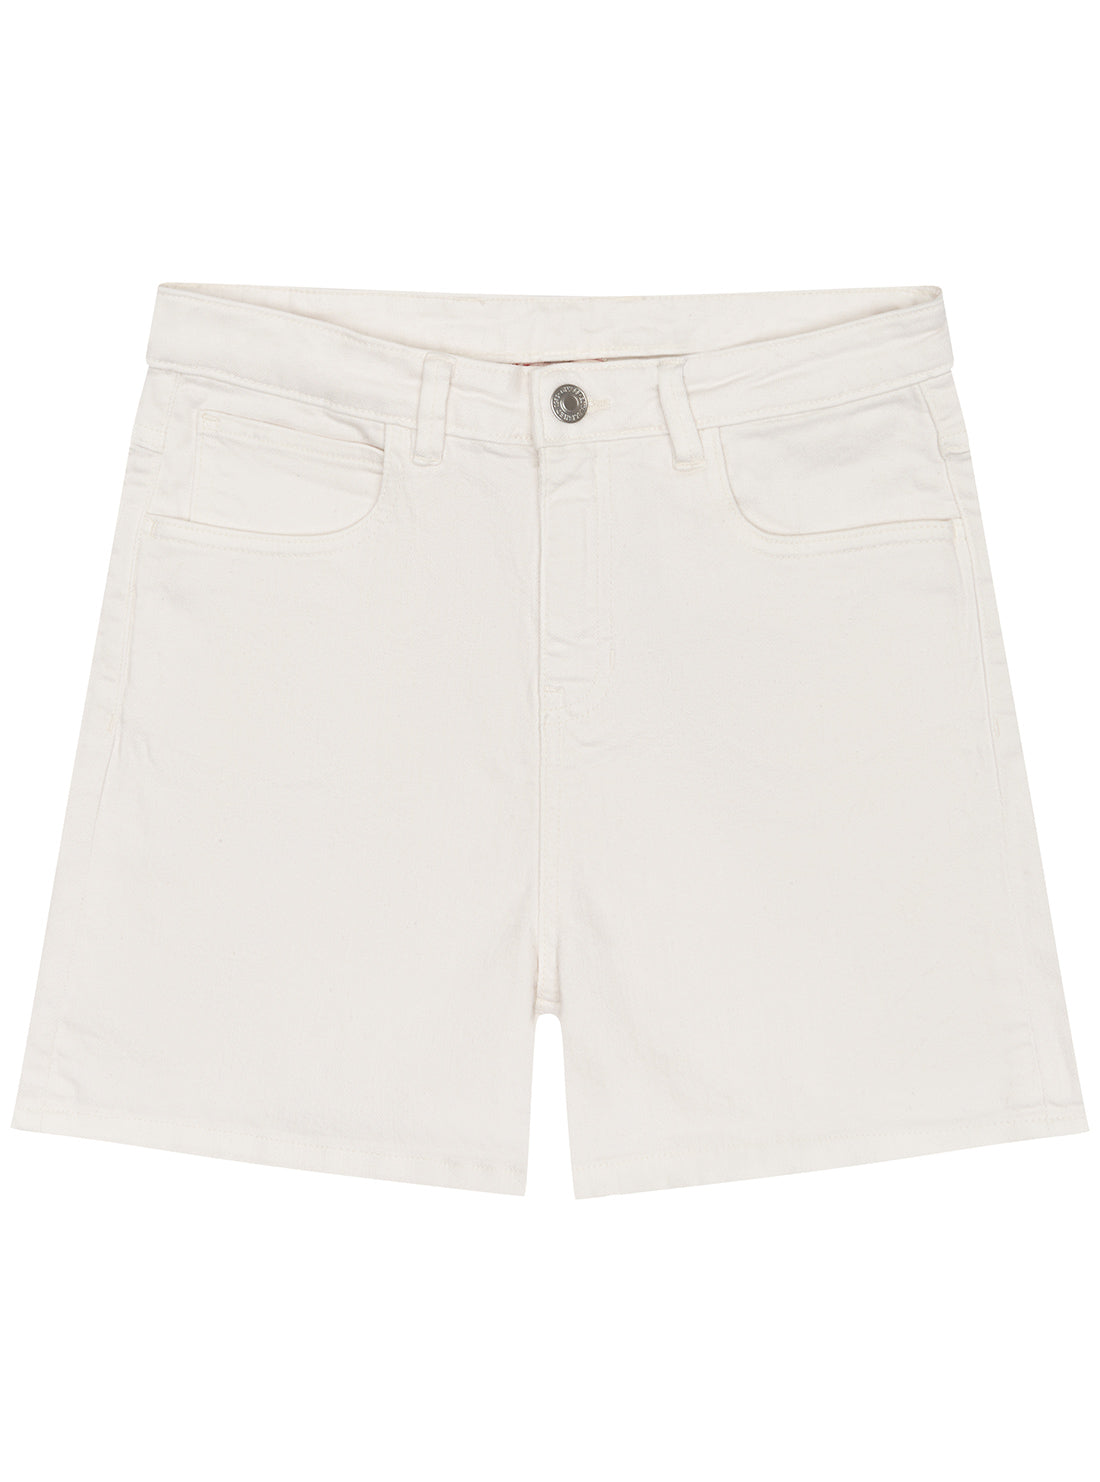 White Bull Denim Shorts (7-16) | GUESS Kids | front view